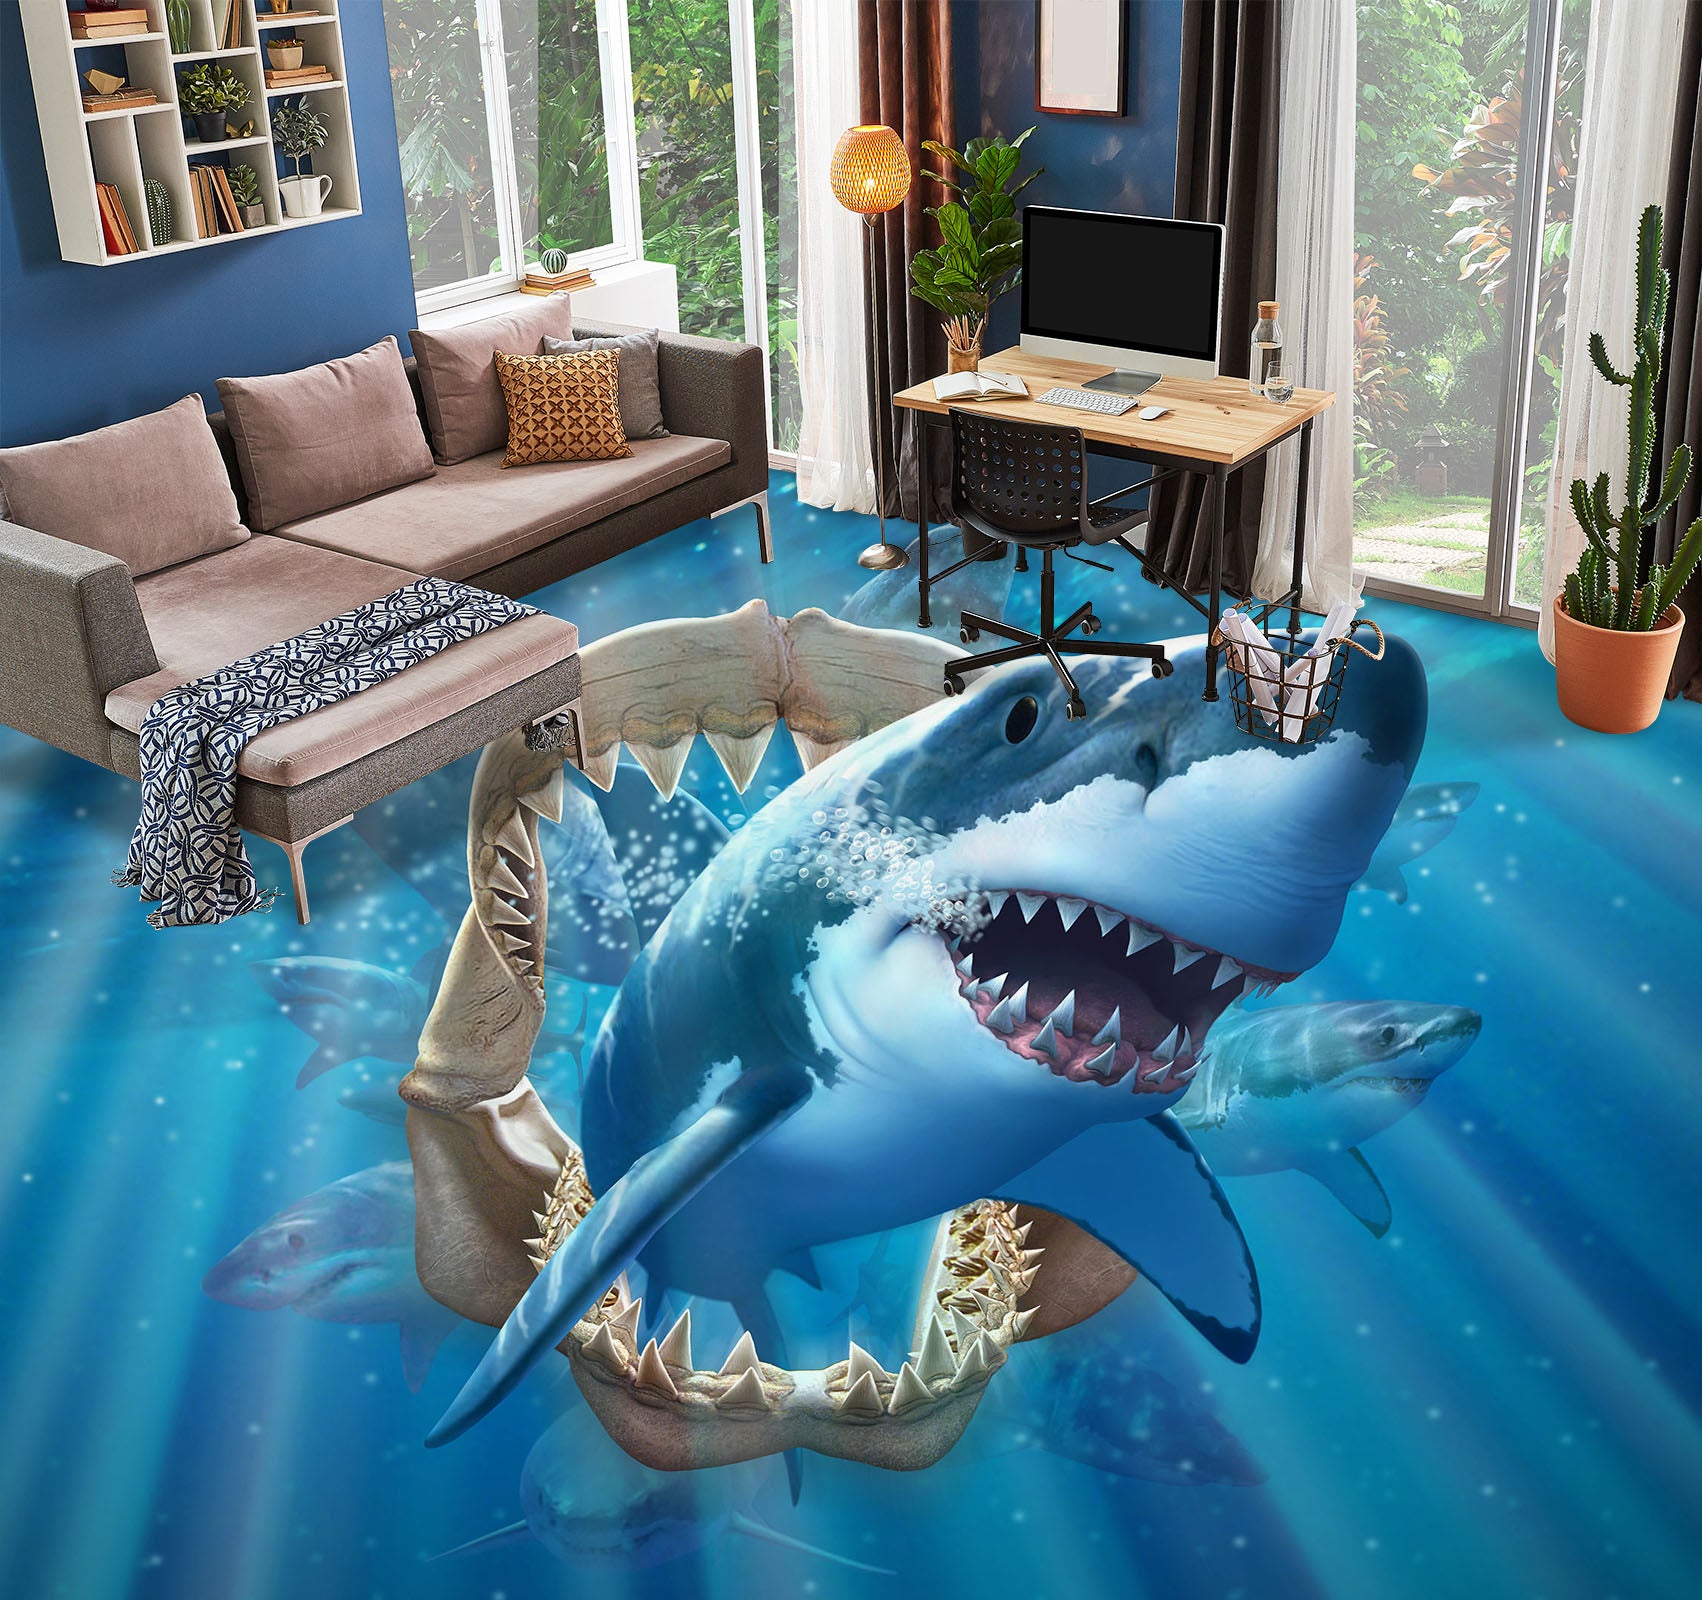 3D Shark 96220 Jerry LoFaro Floor Mural  Wallpaper Murals Self-Adhesive Removable Print Epoxy